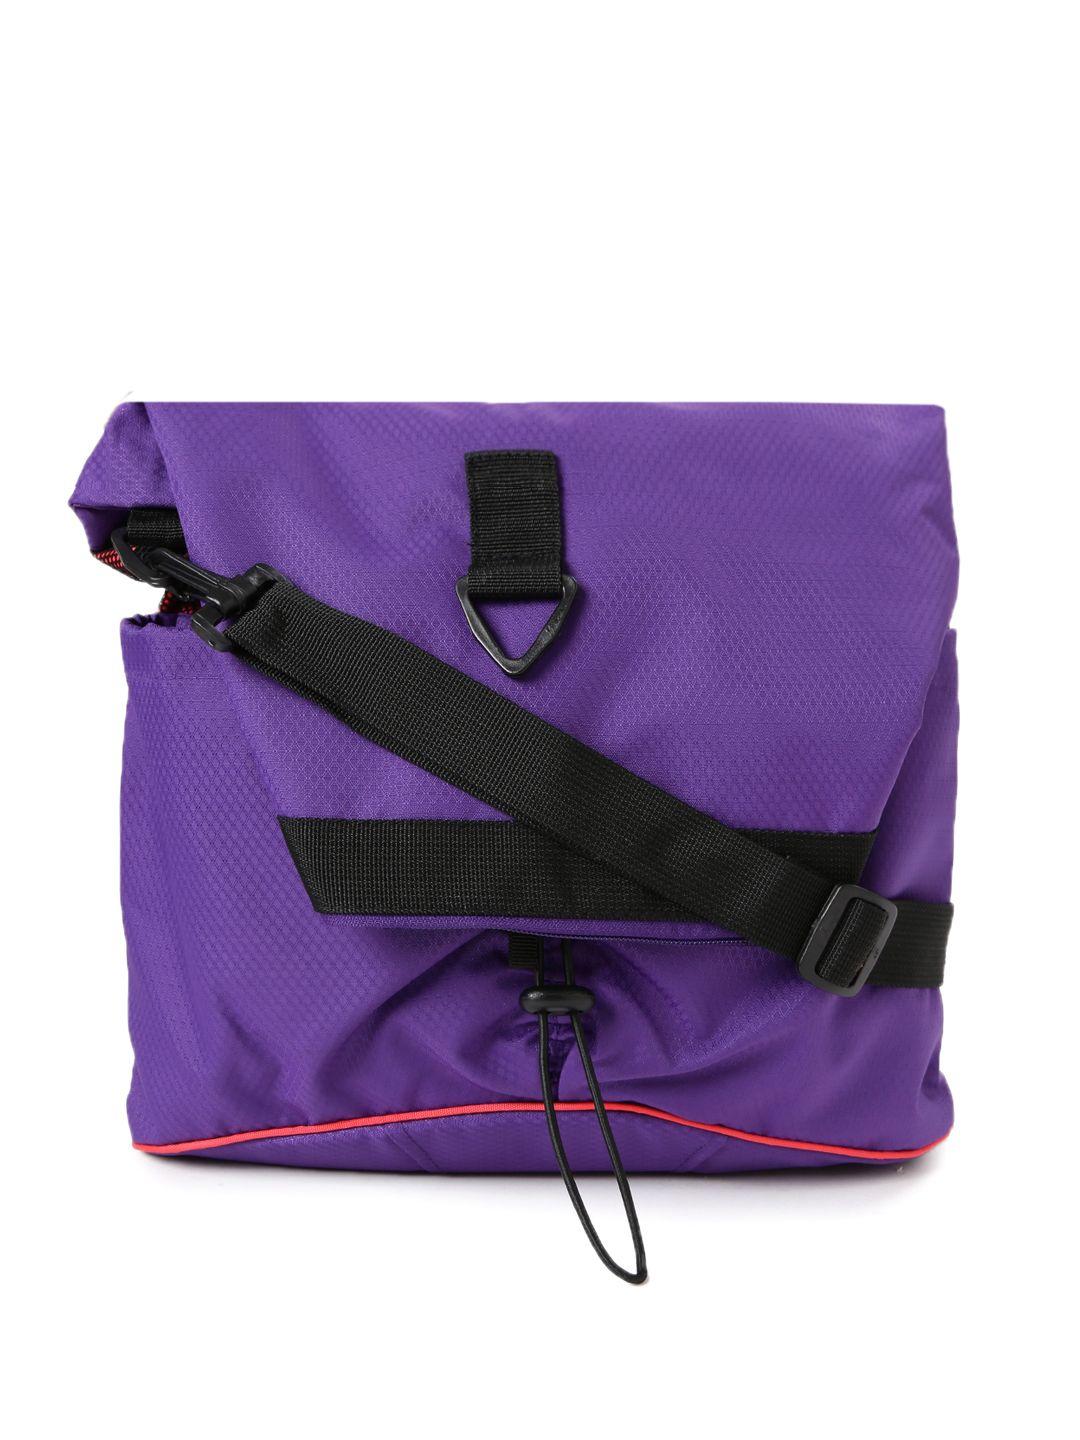 fastrack purple sling bag